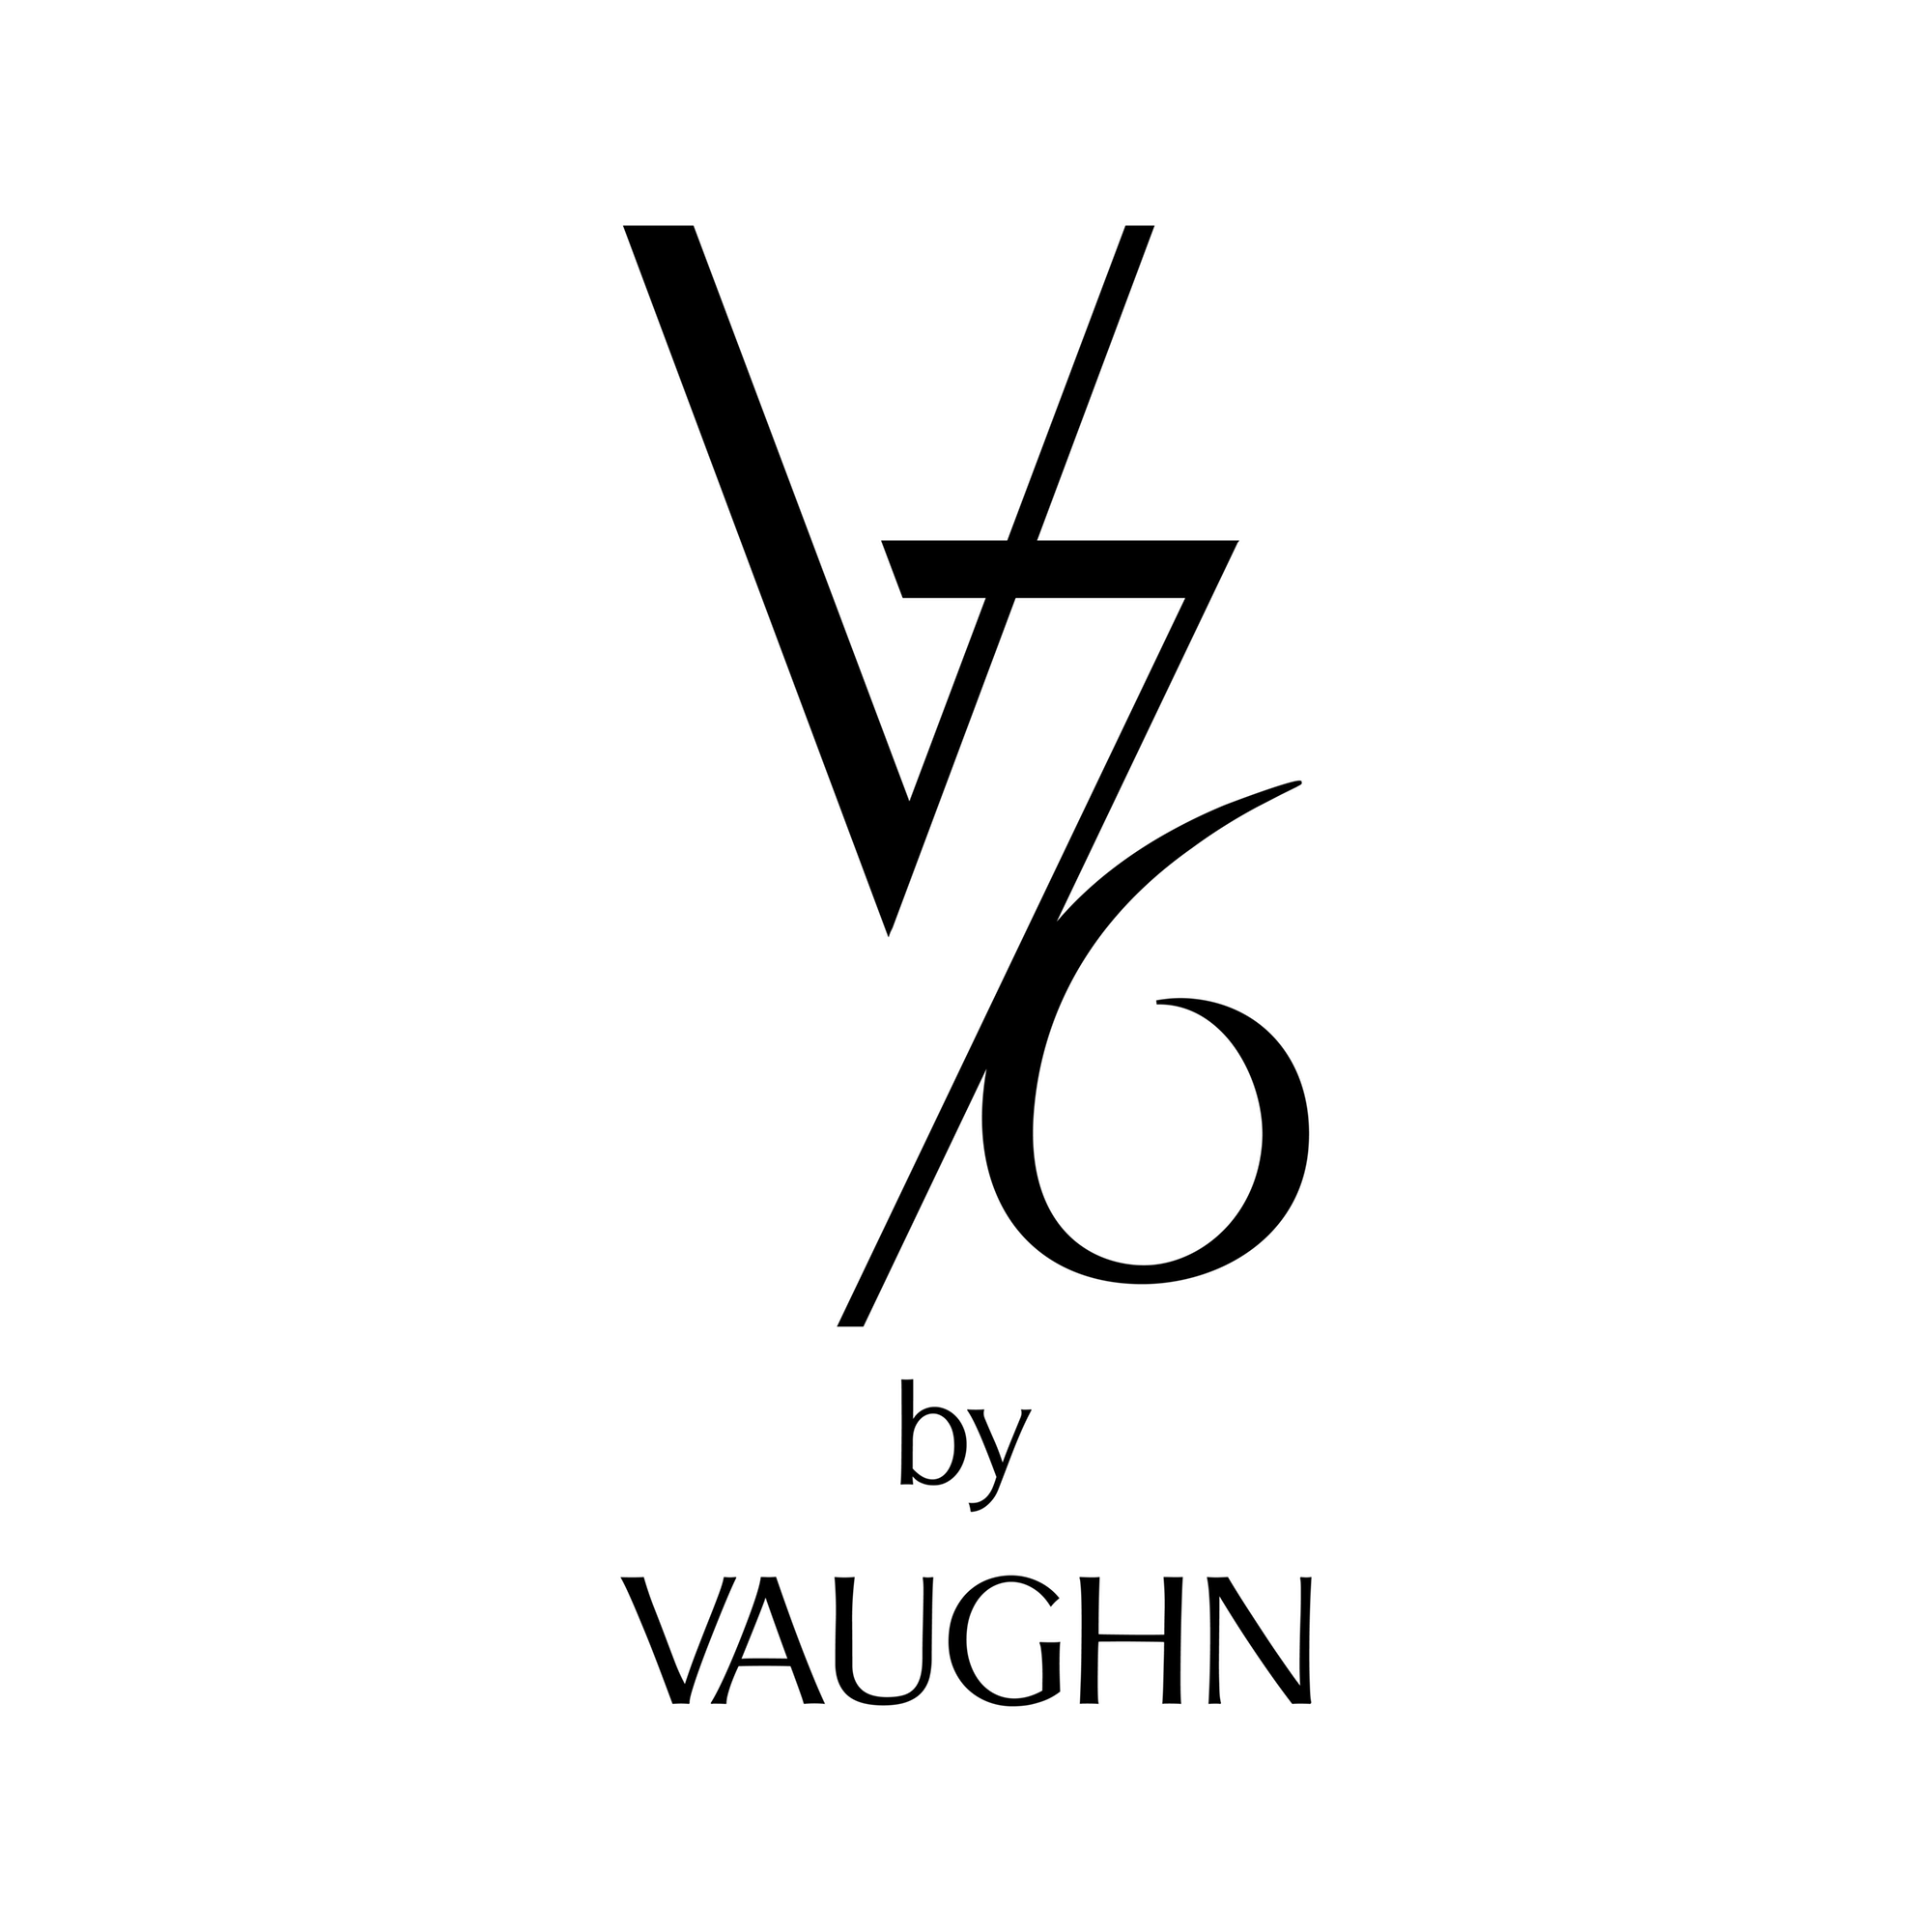 Vaughn Logo - Amazon.com: V76 by Vaughn